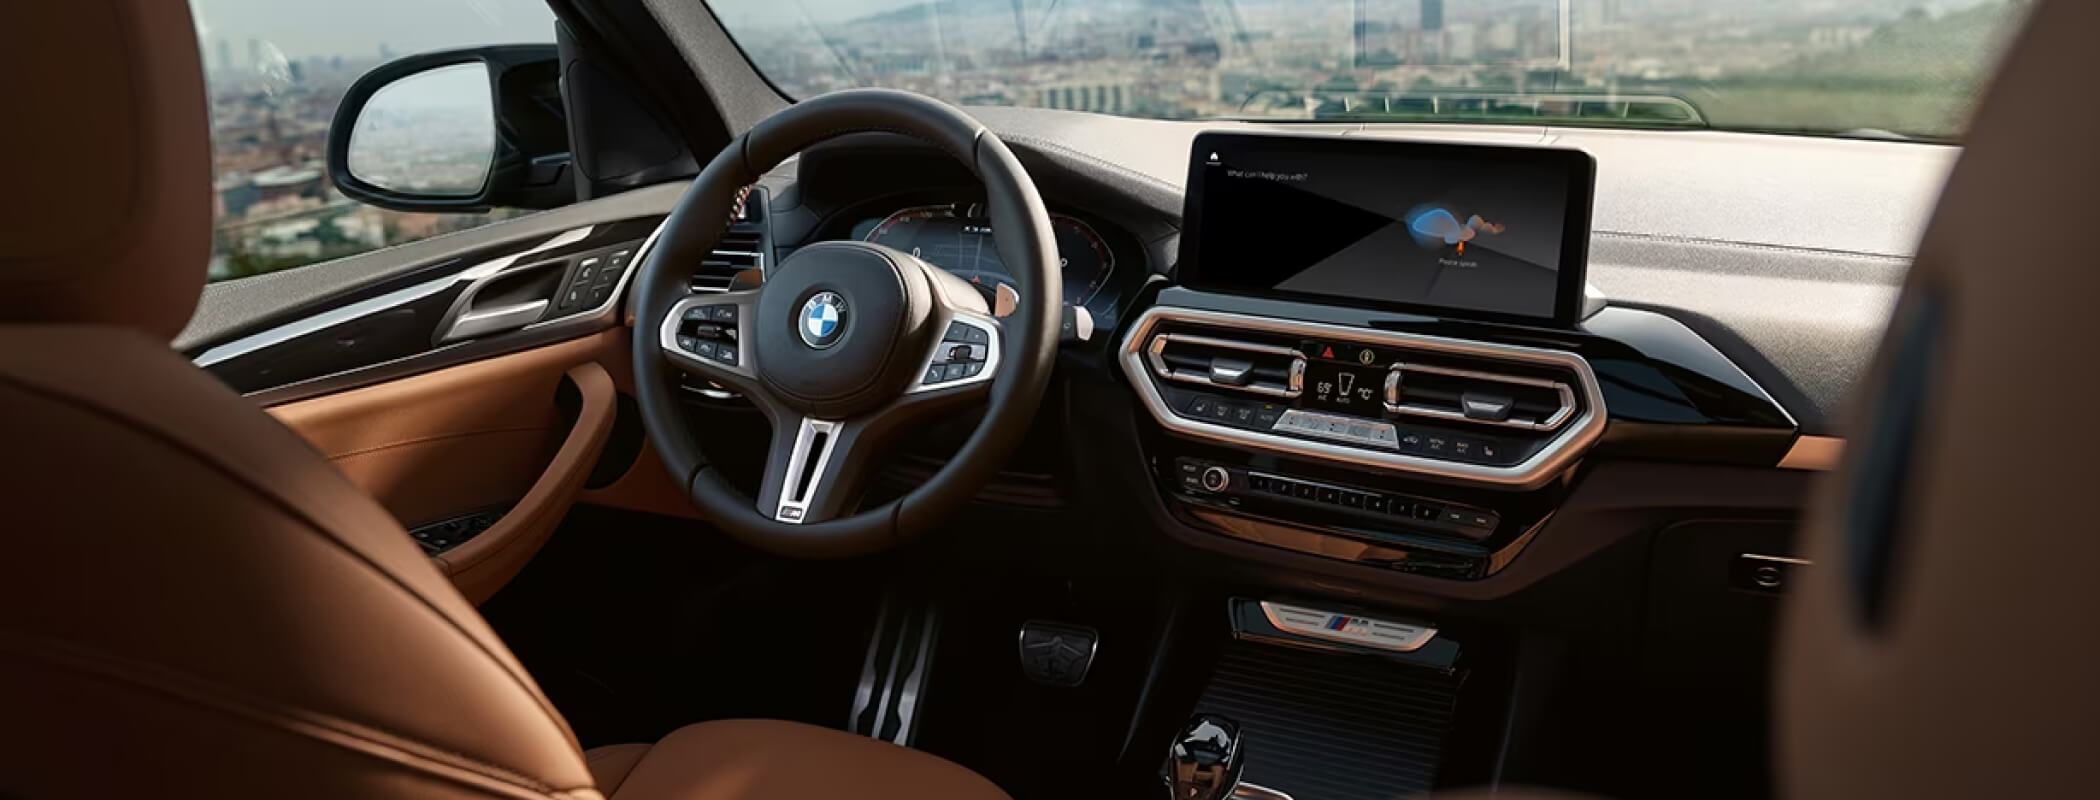 BMW X3 Interior